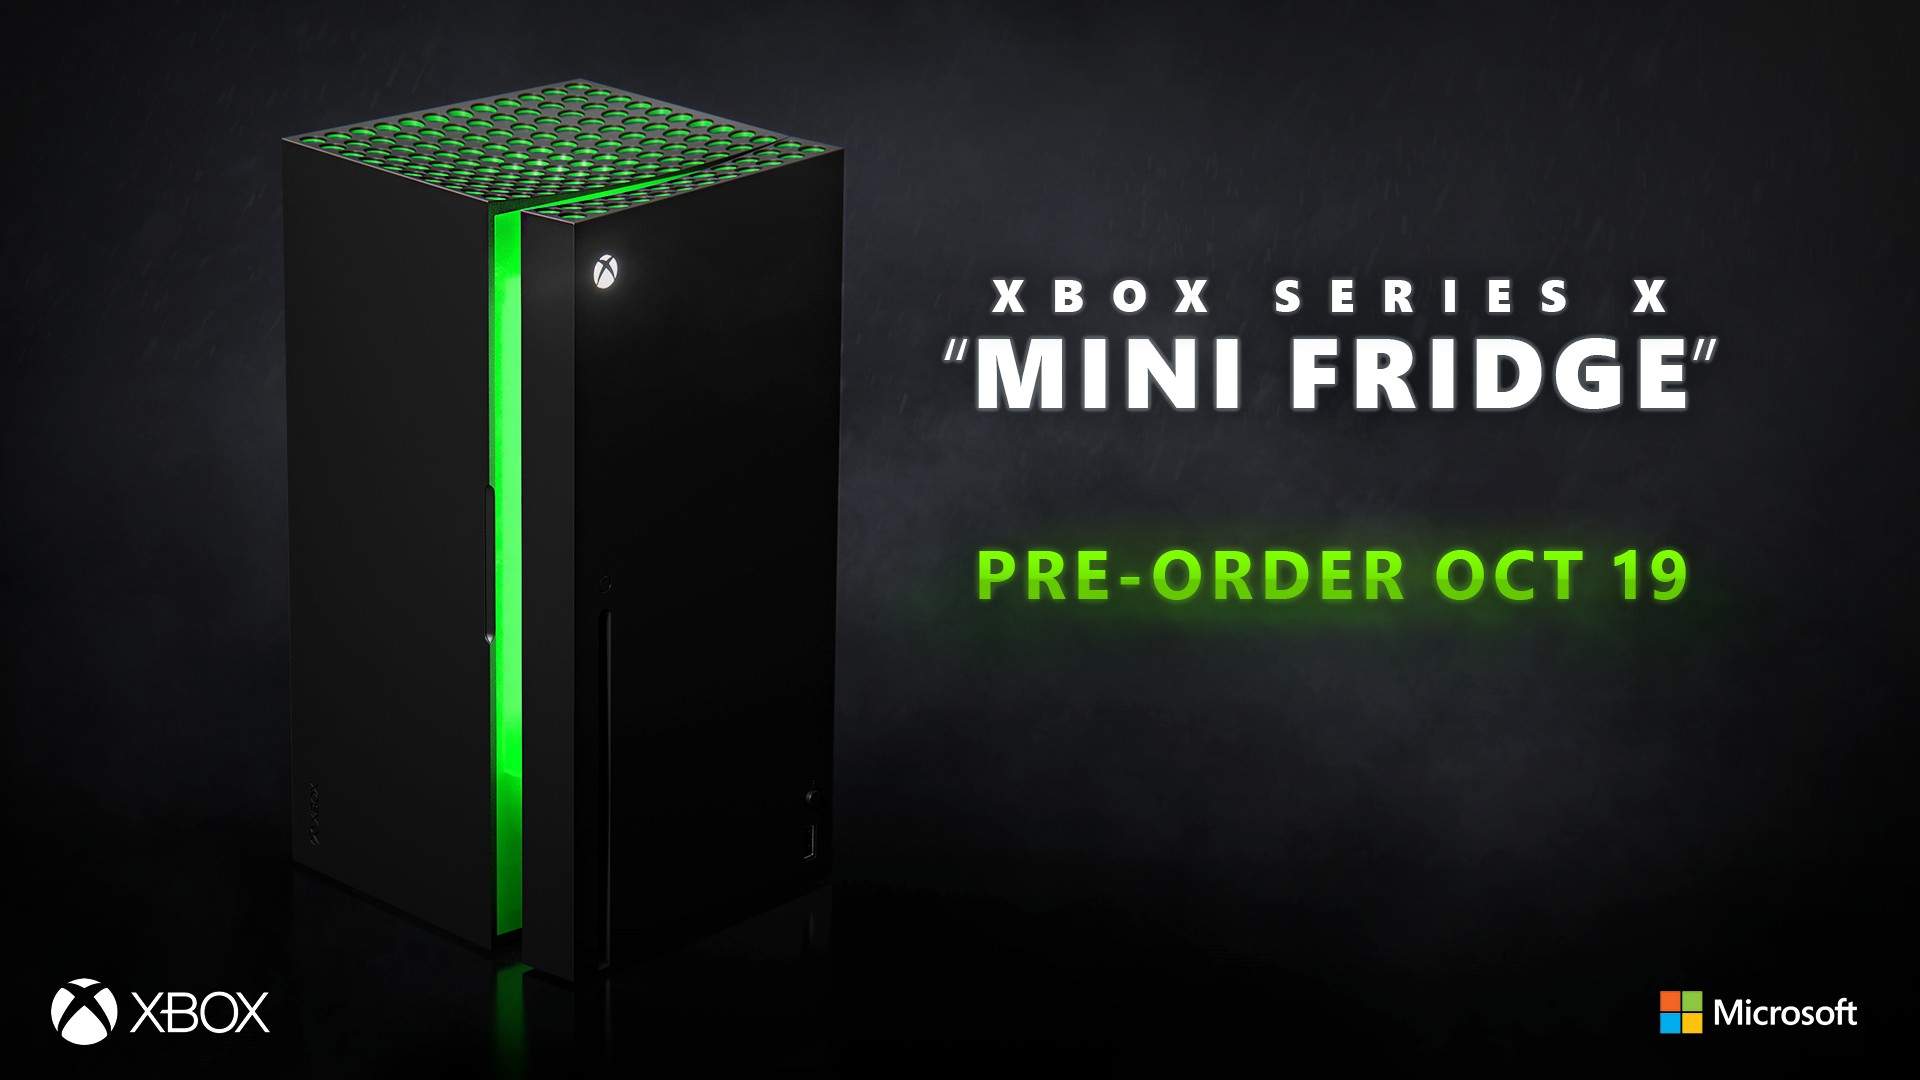 Xbox Series X “Mini Fridge”